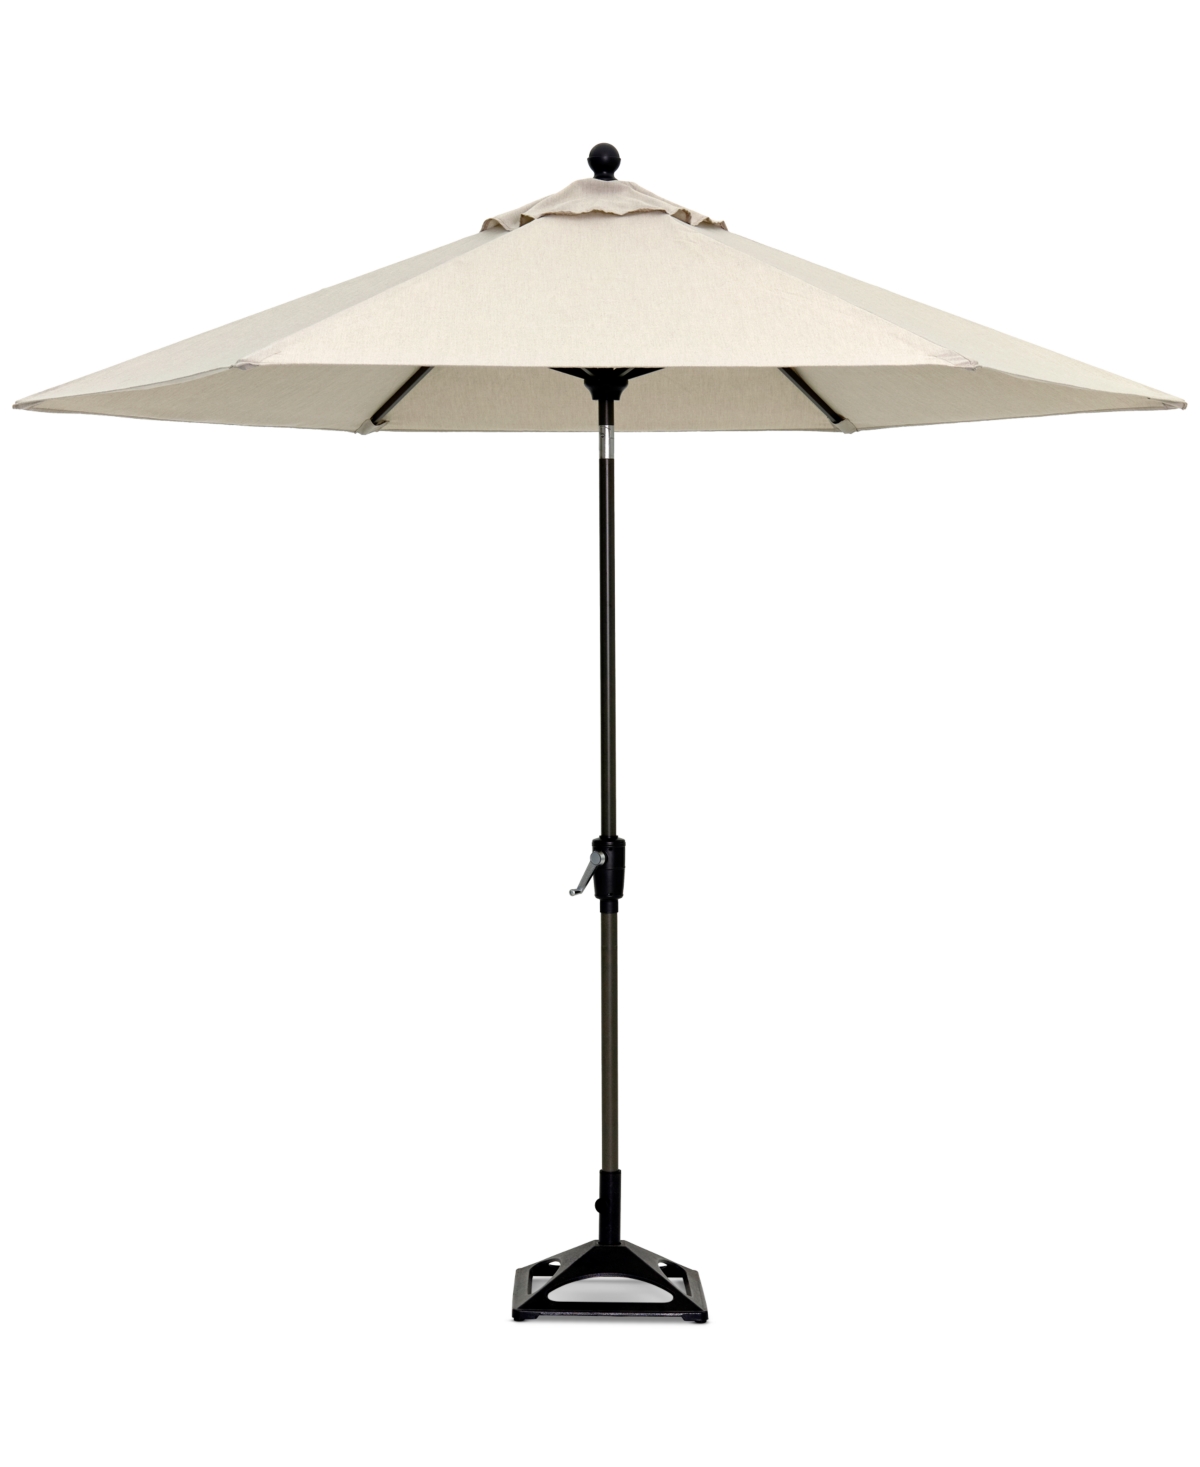 Agio Closeout! Avanti Outdoor 9' Auto-tilt Umbrella In Outdura Remy Cloud